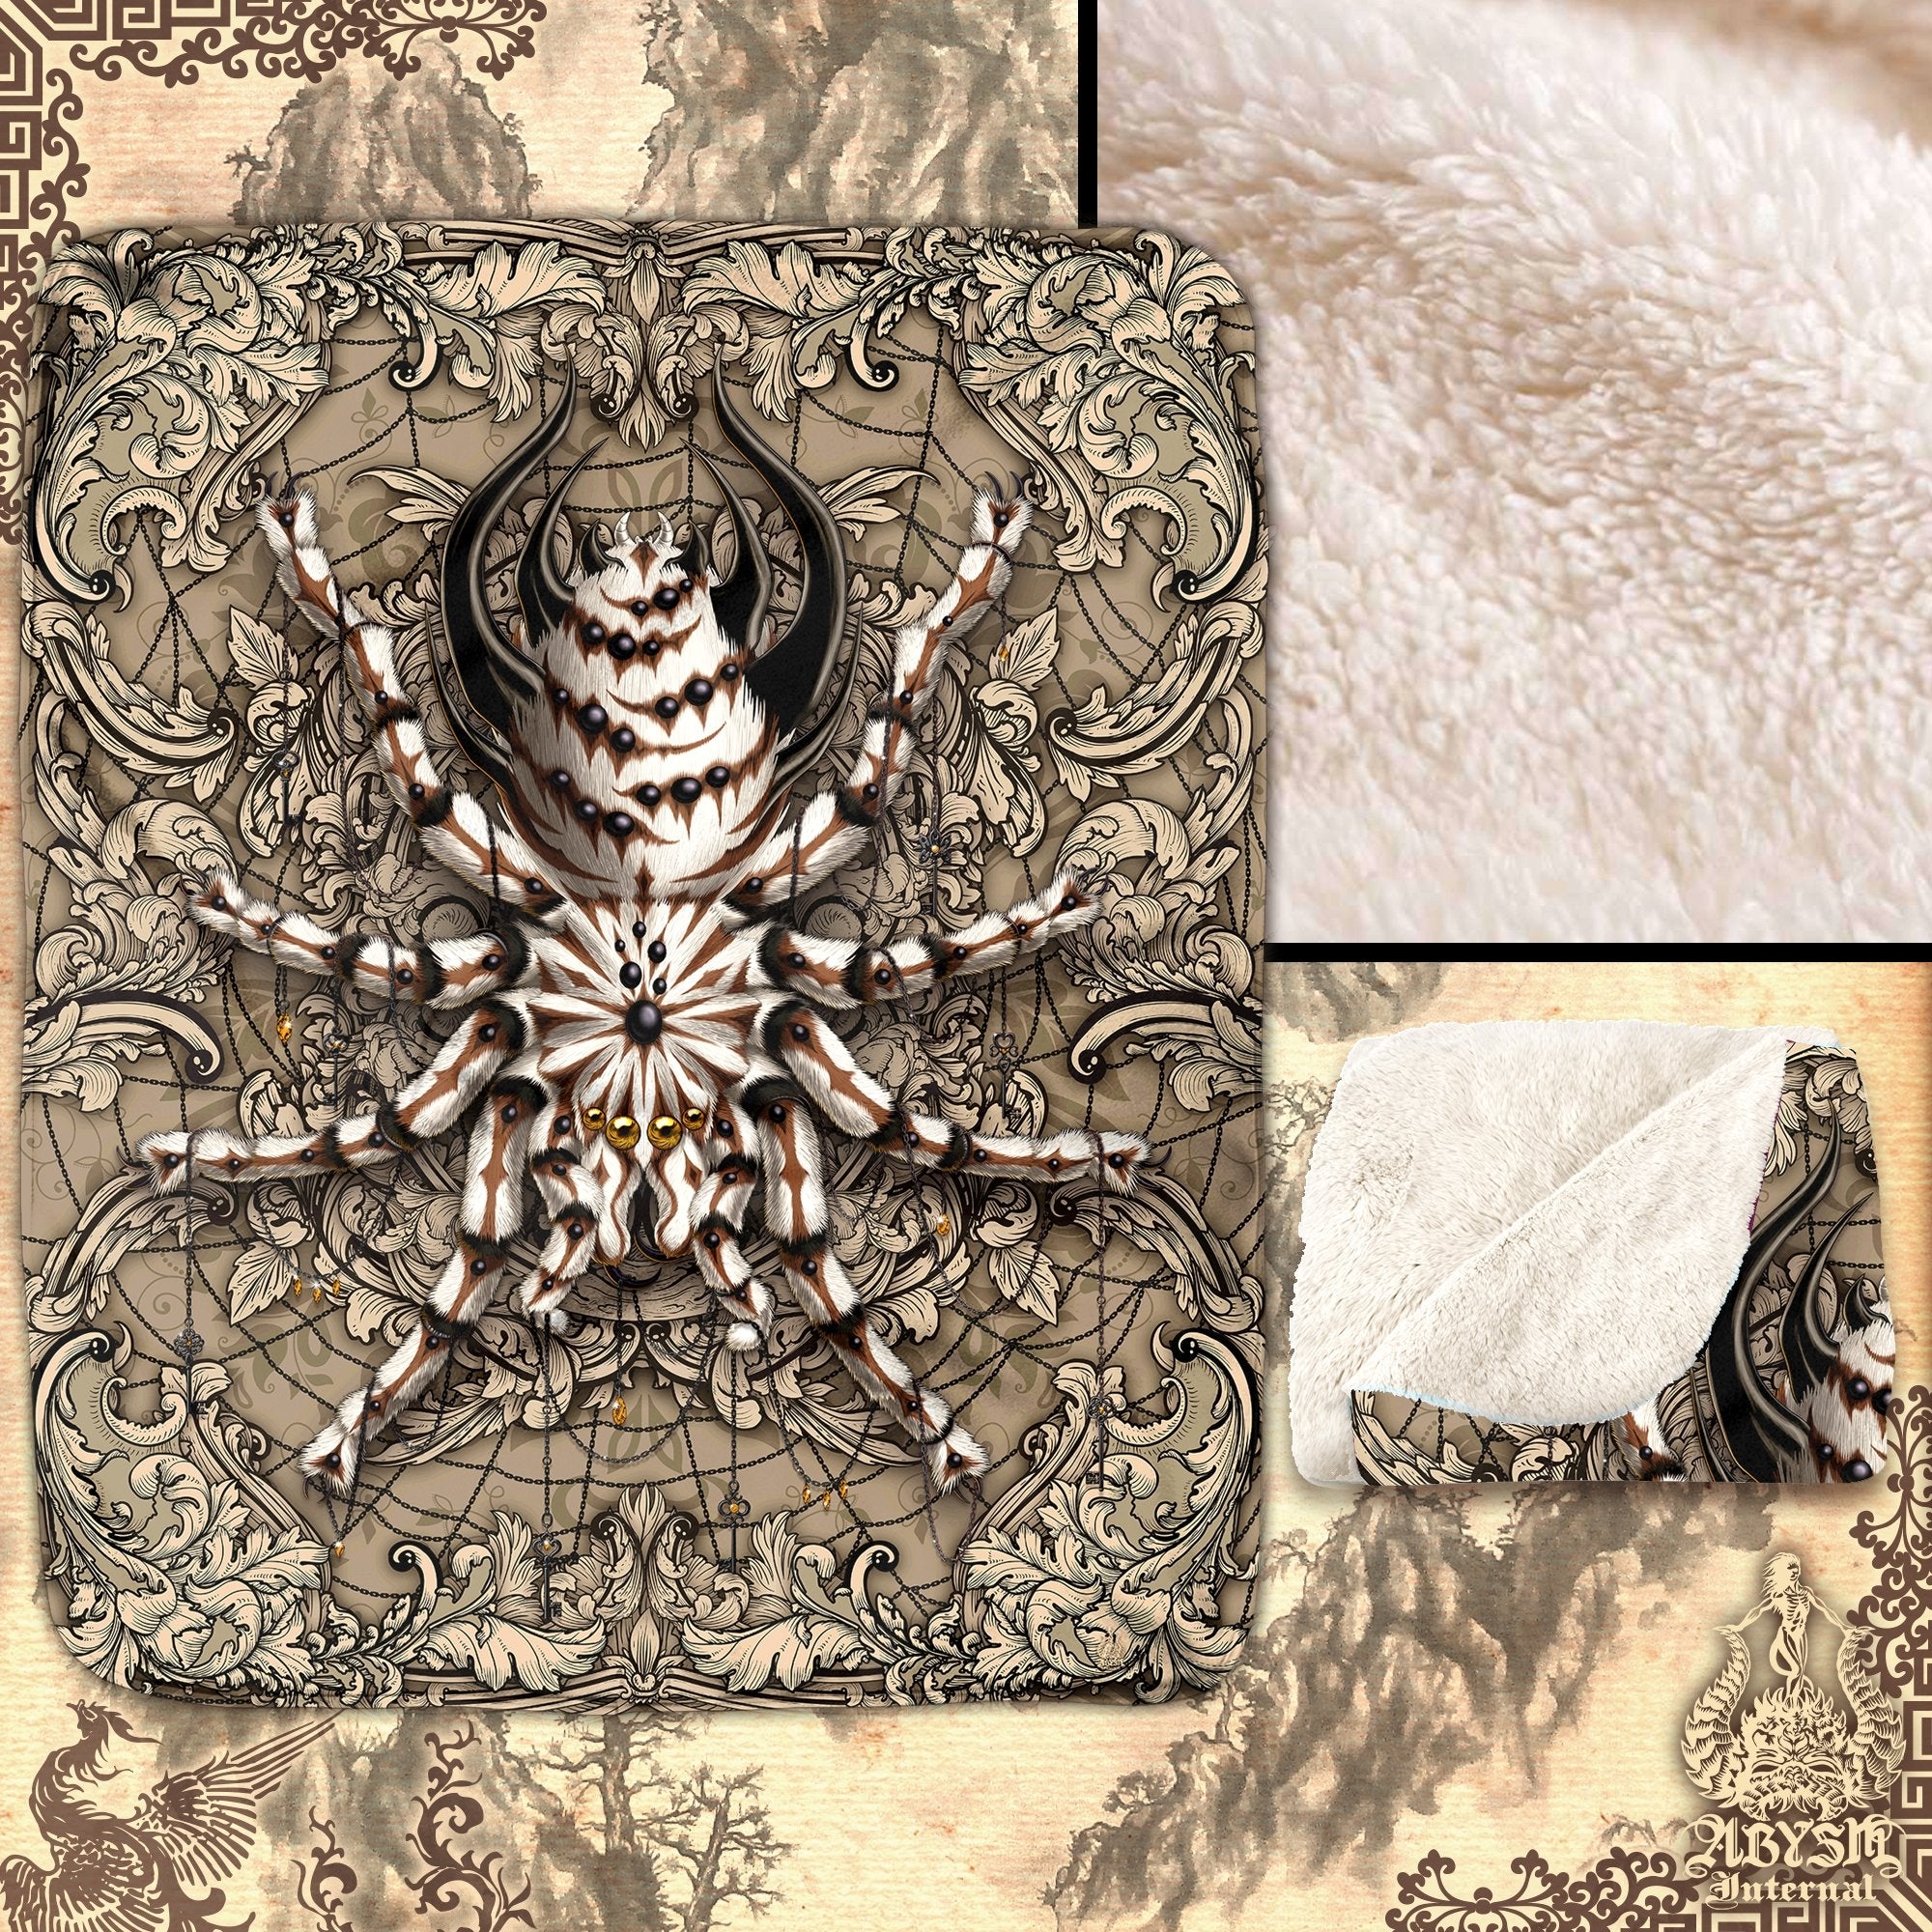 Spider Throw Fleece Blanket, Alternative Home Decor, Eclectic and Funky Gift - Cream, Tarantula Art - Abysm Internal